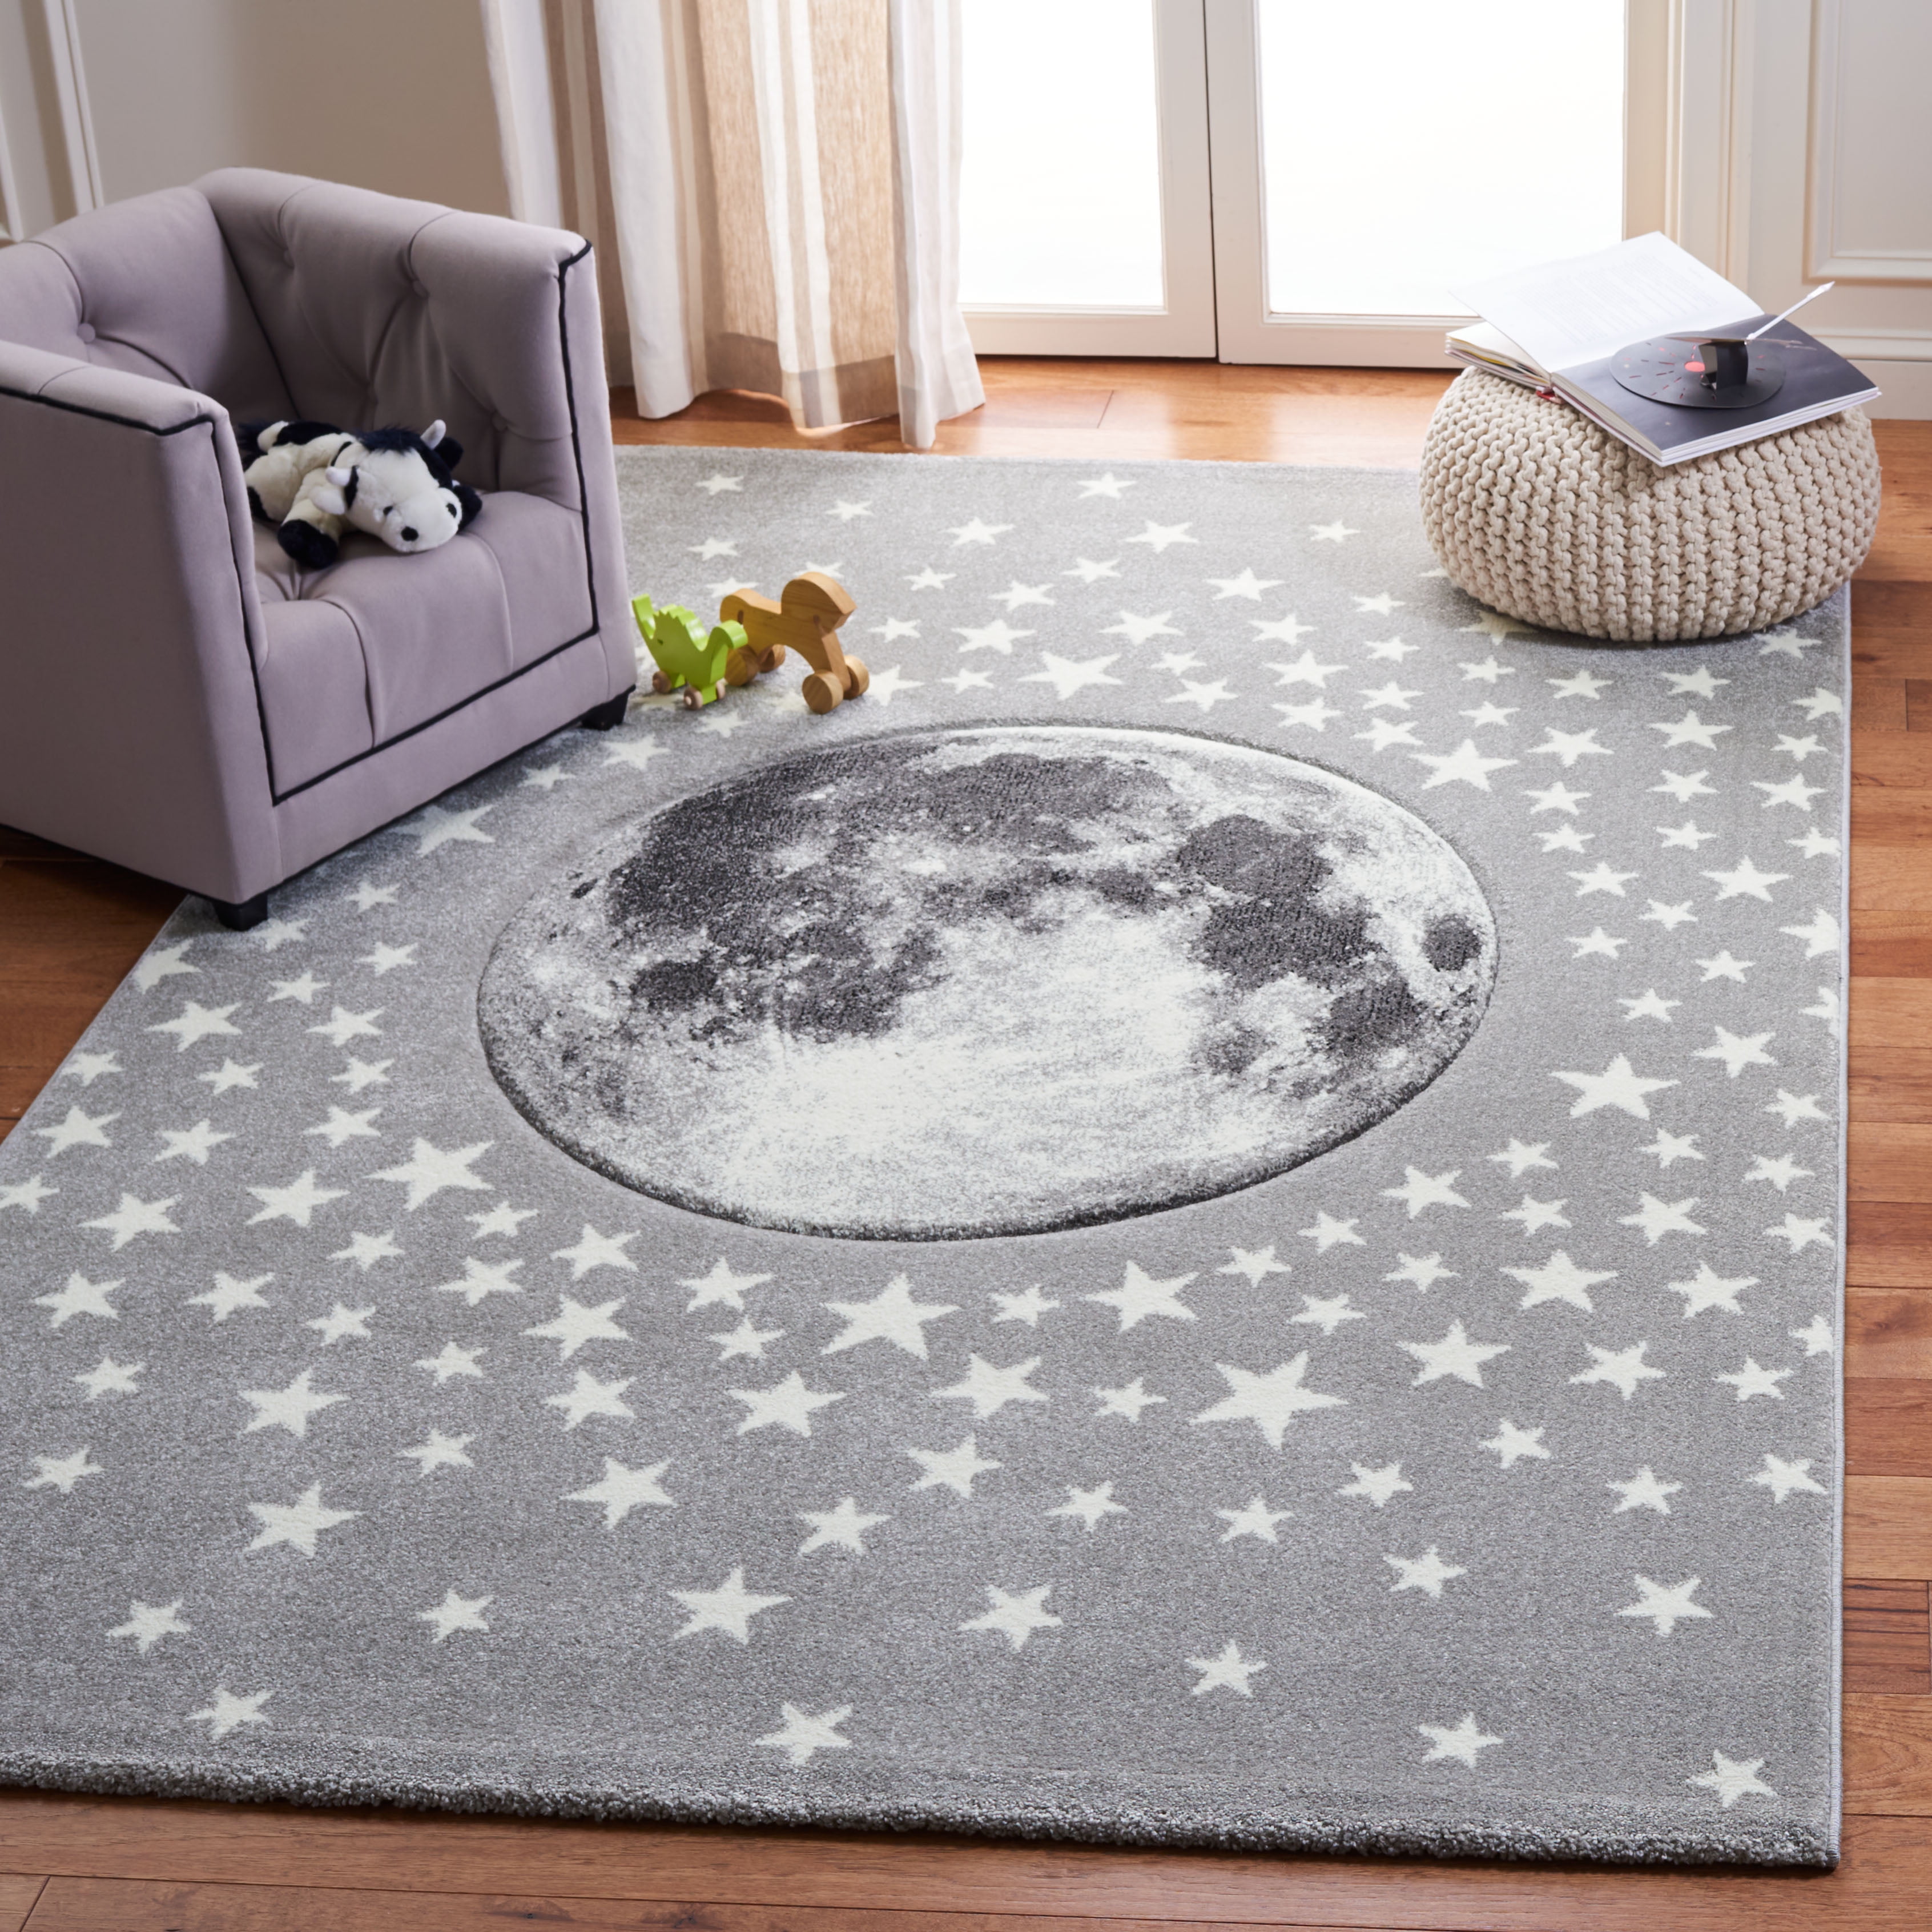 Blue Sky Moon and Stars Area Rugs Bedroom Carpet Living Room Round Floor Mat Rug 